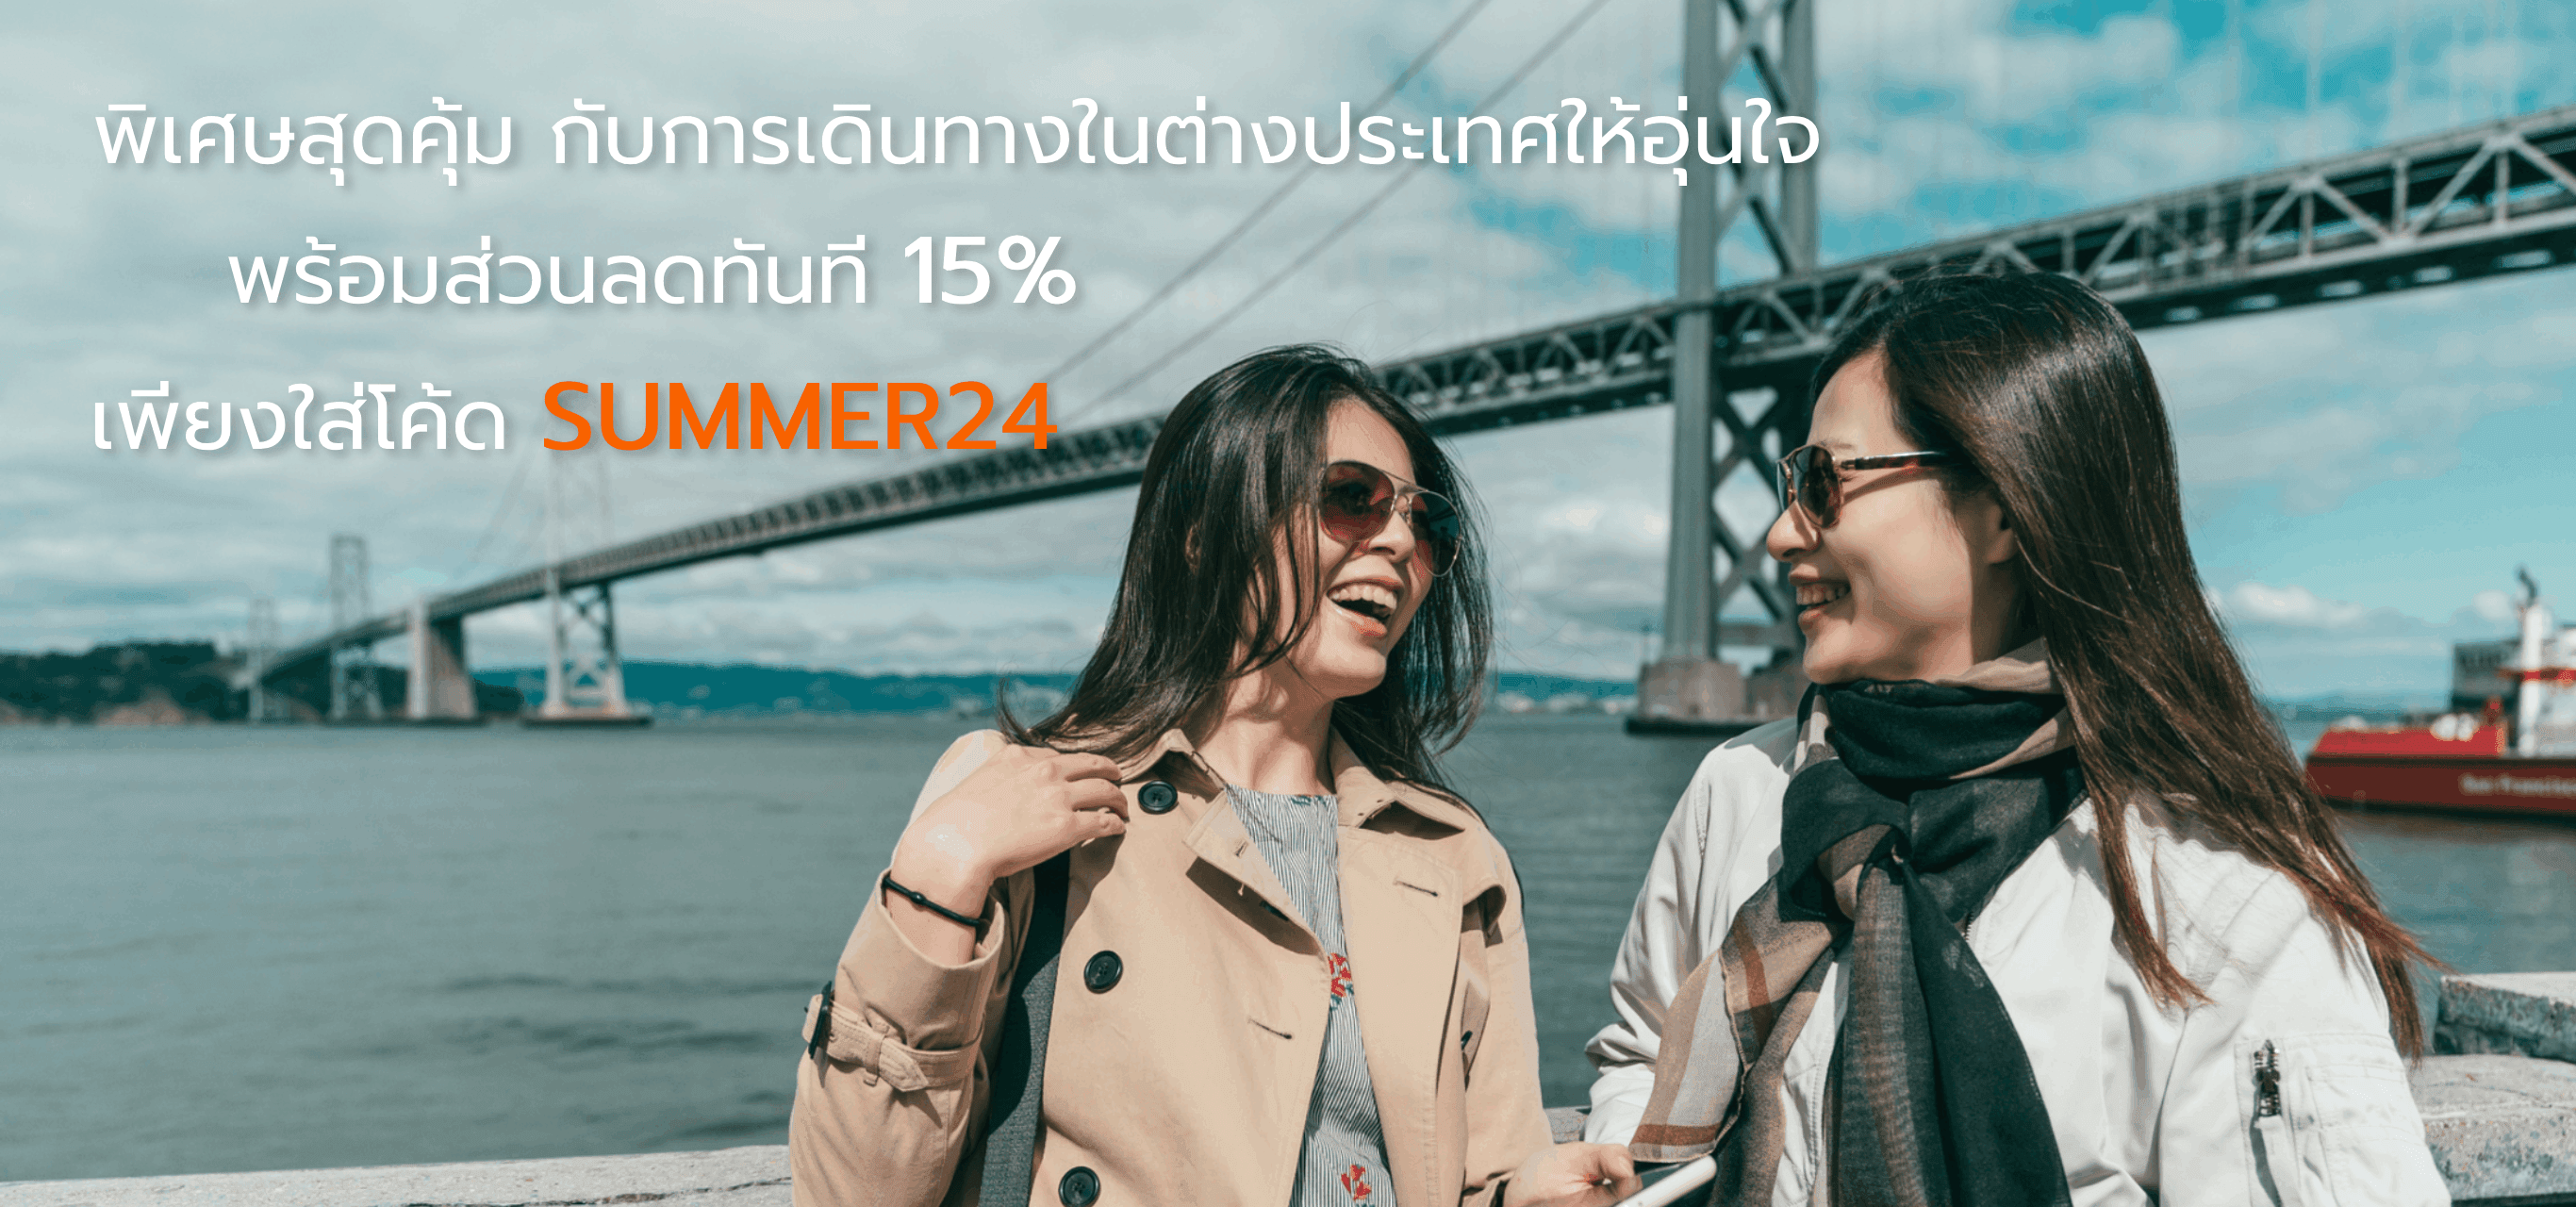 Travel Health Plus 15% Discount APR2024